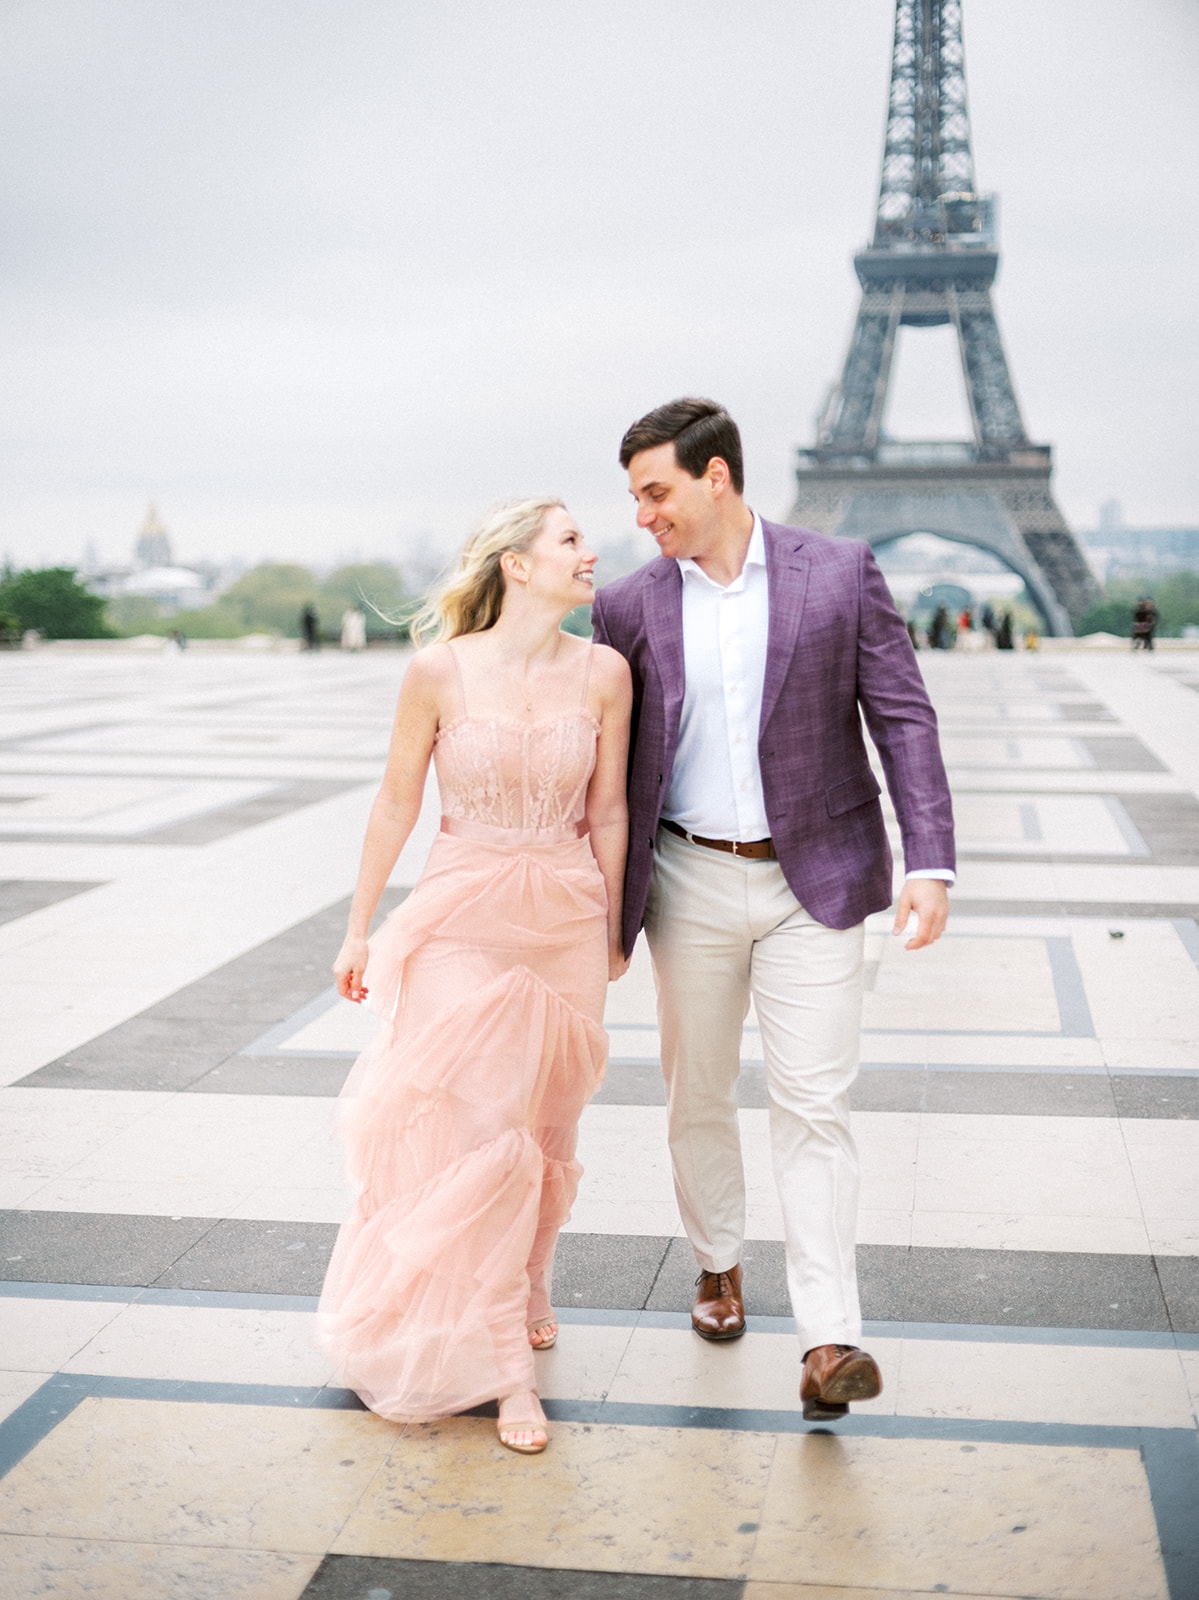 Couple walking away from Eiffel Tower.